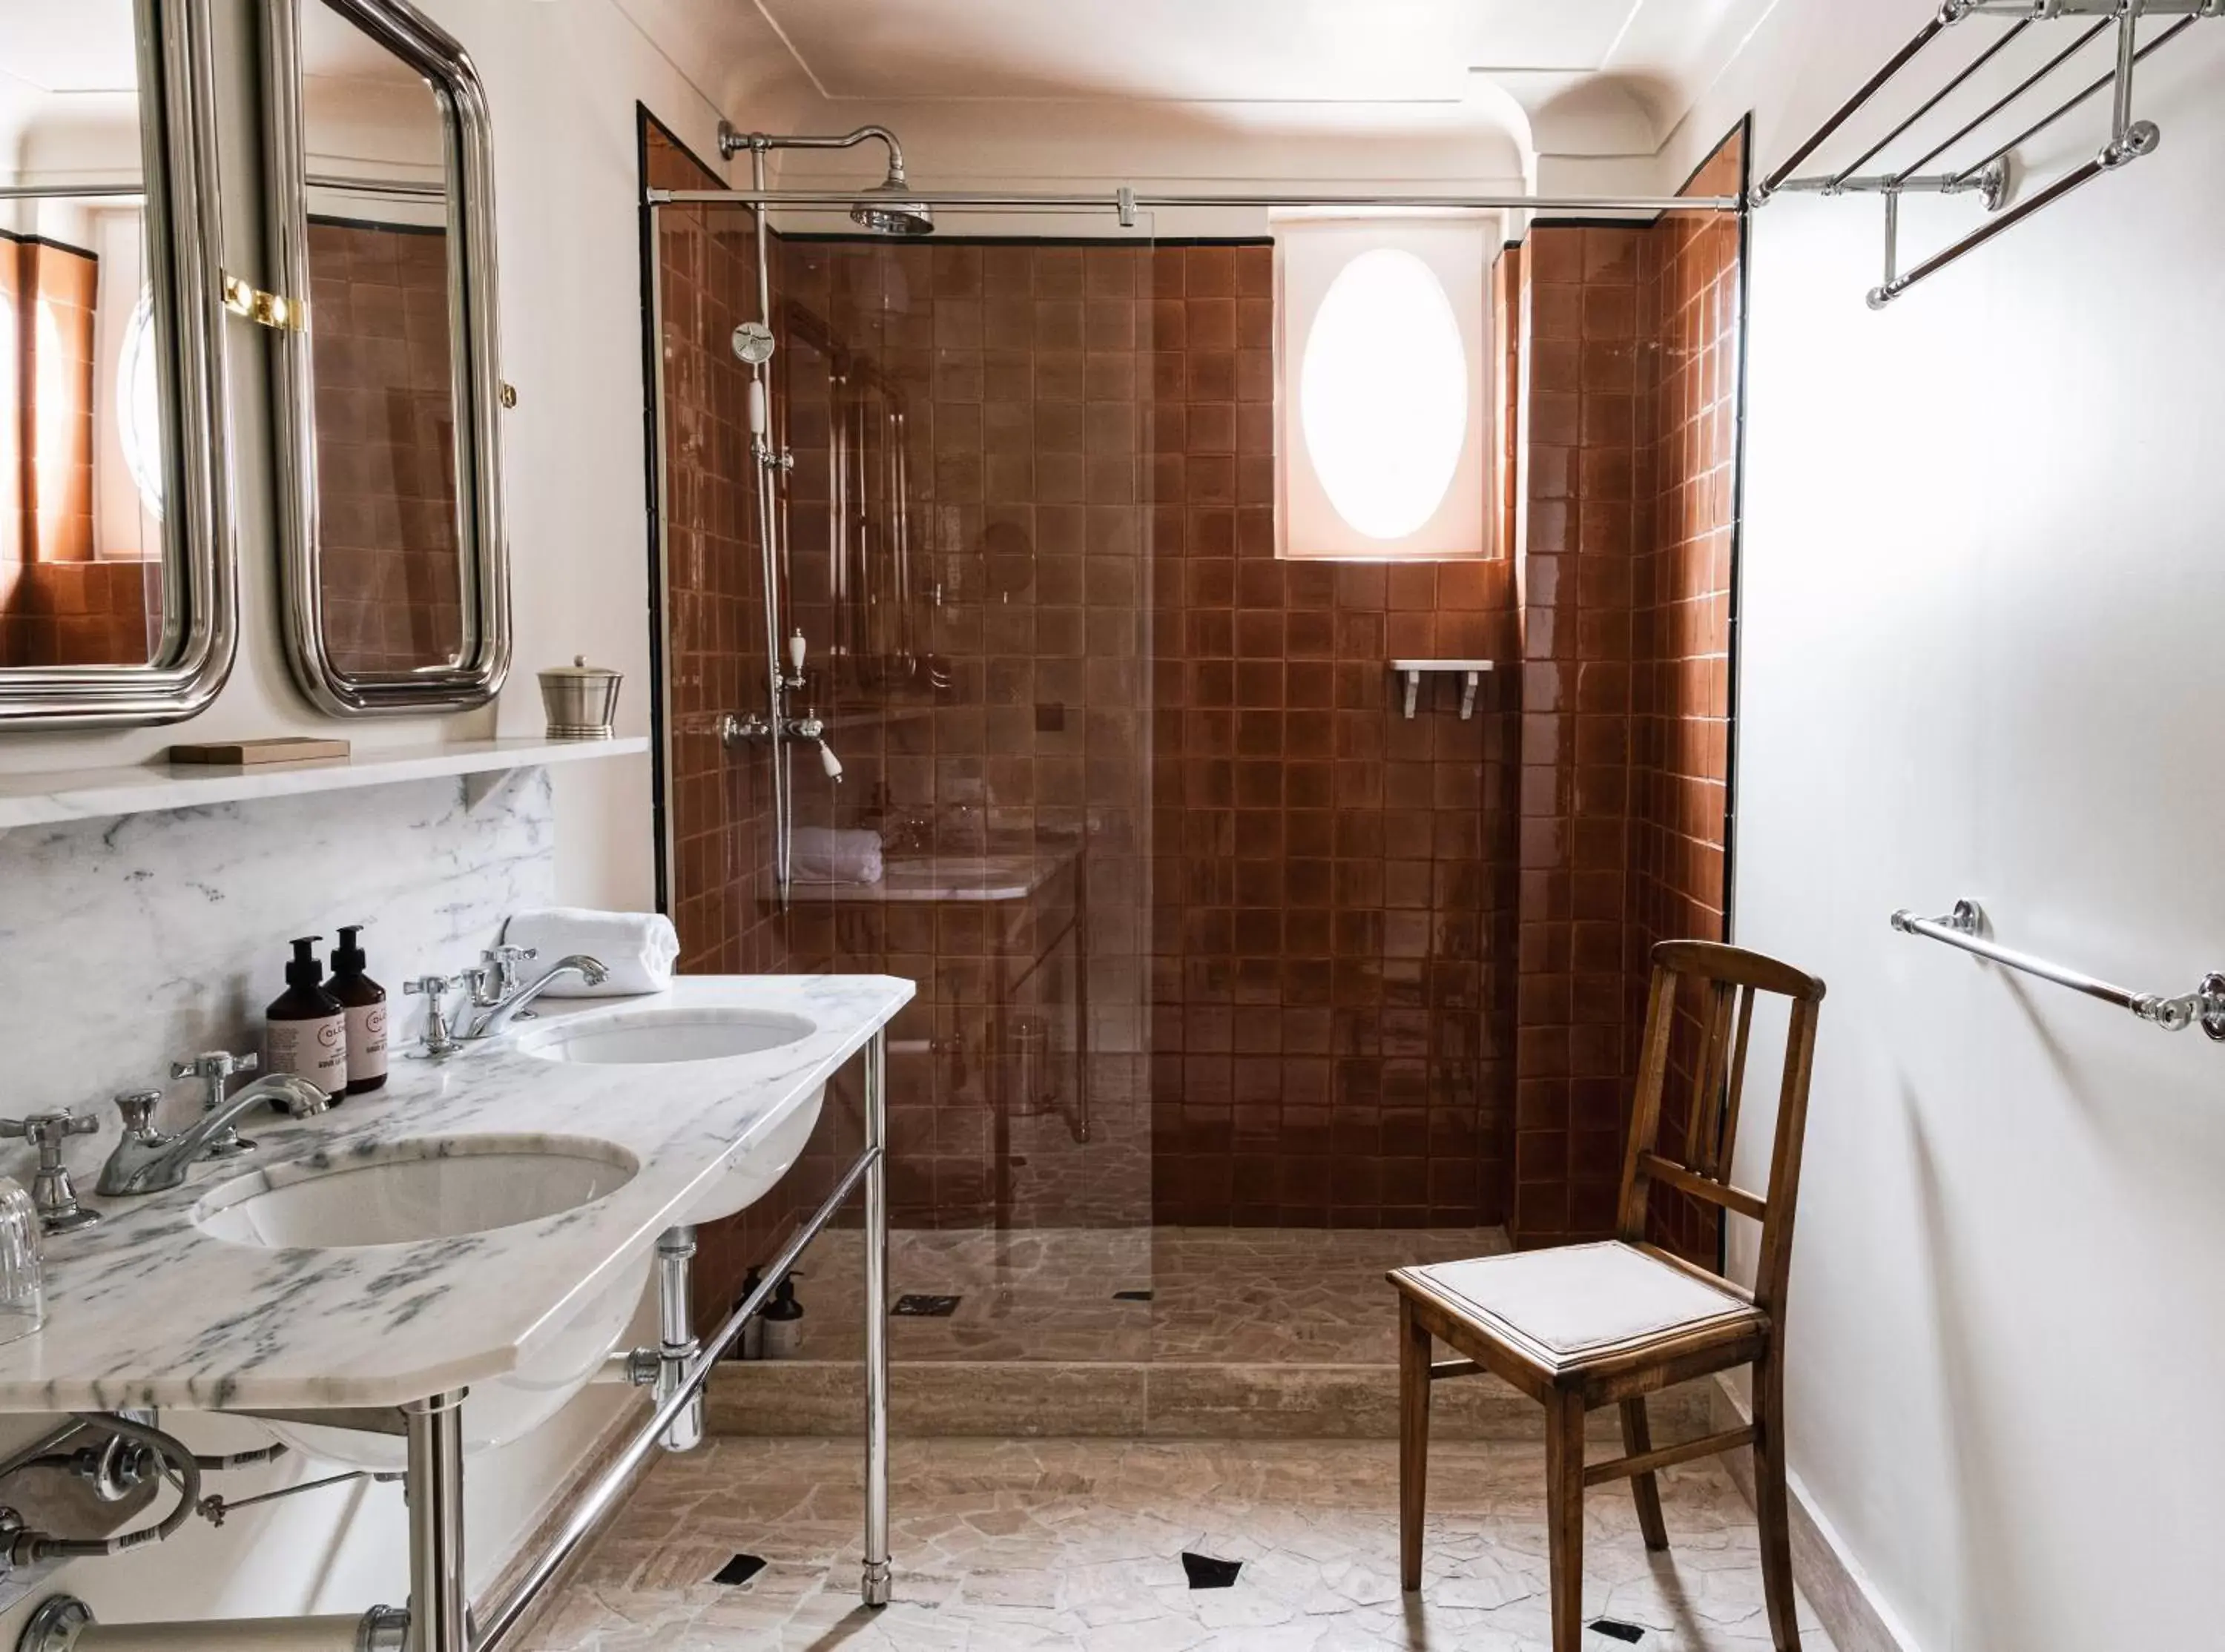 Bathroom in Hotel Rochechouart - Orso Hotels